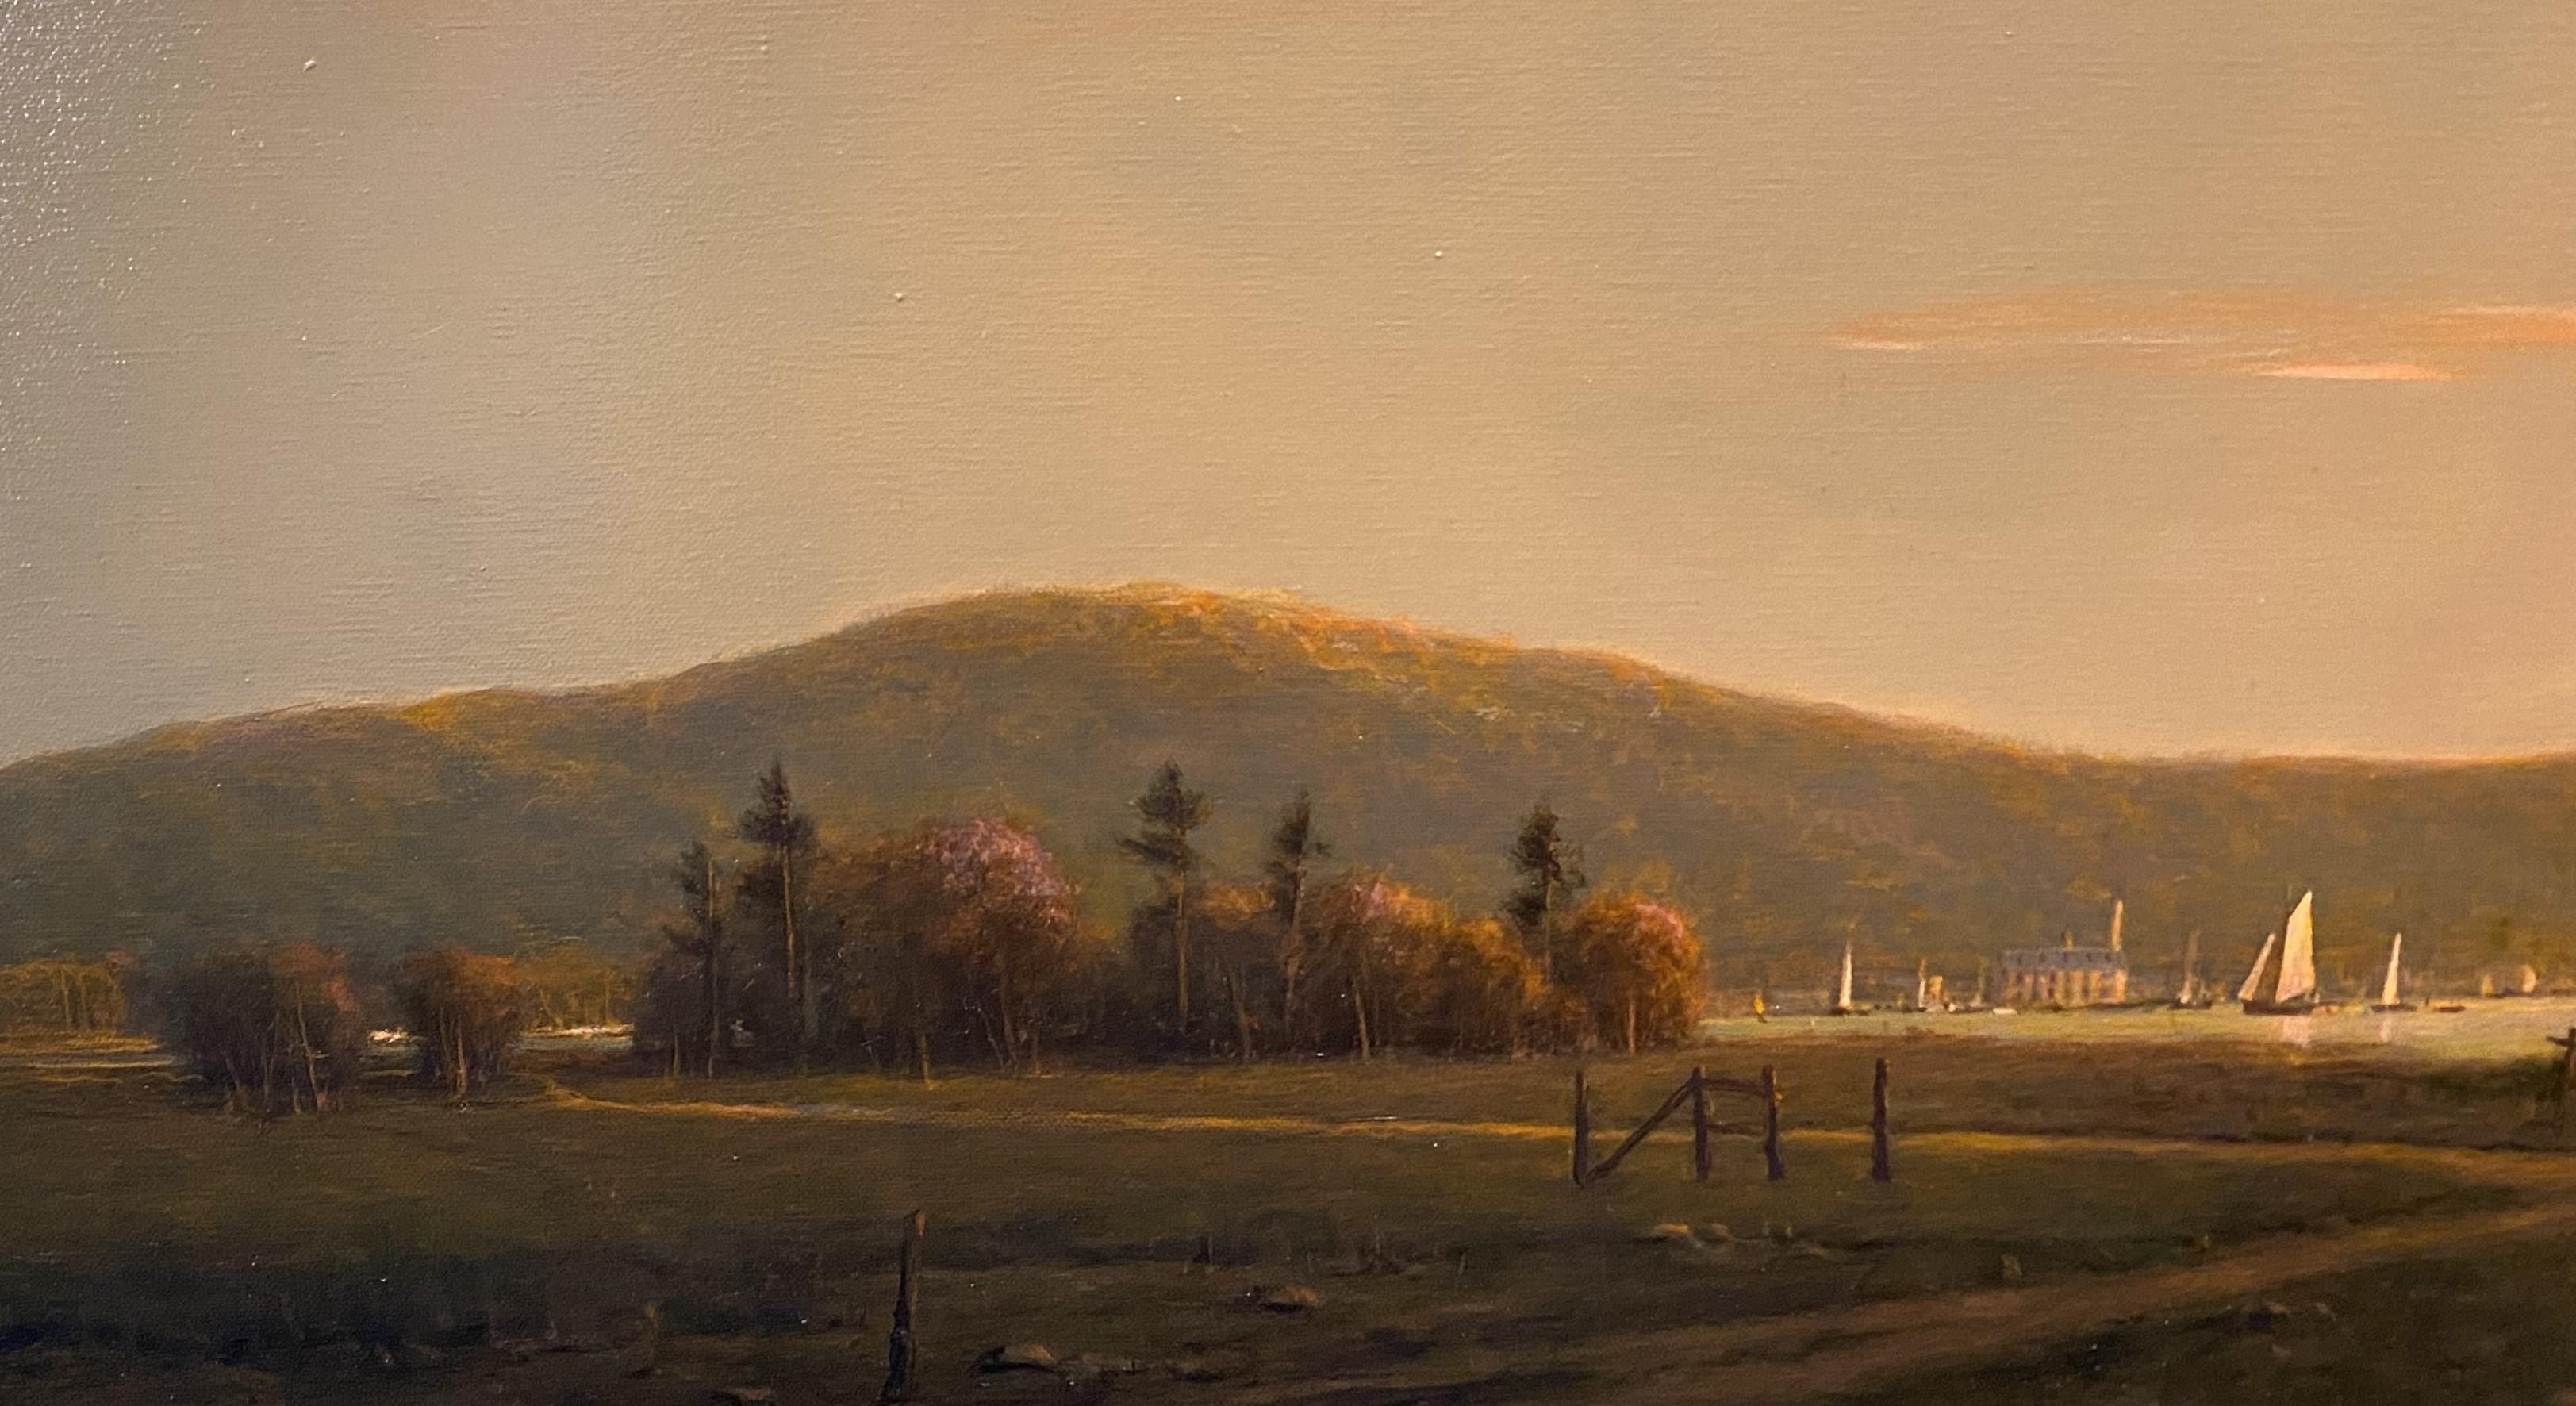 Maine Harbor Sunset - Realist Painting by William R. Davis